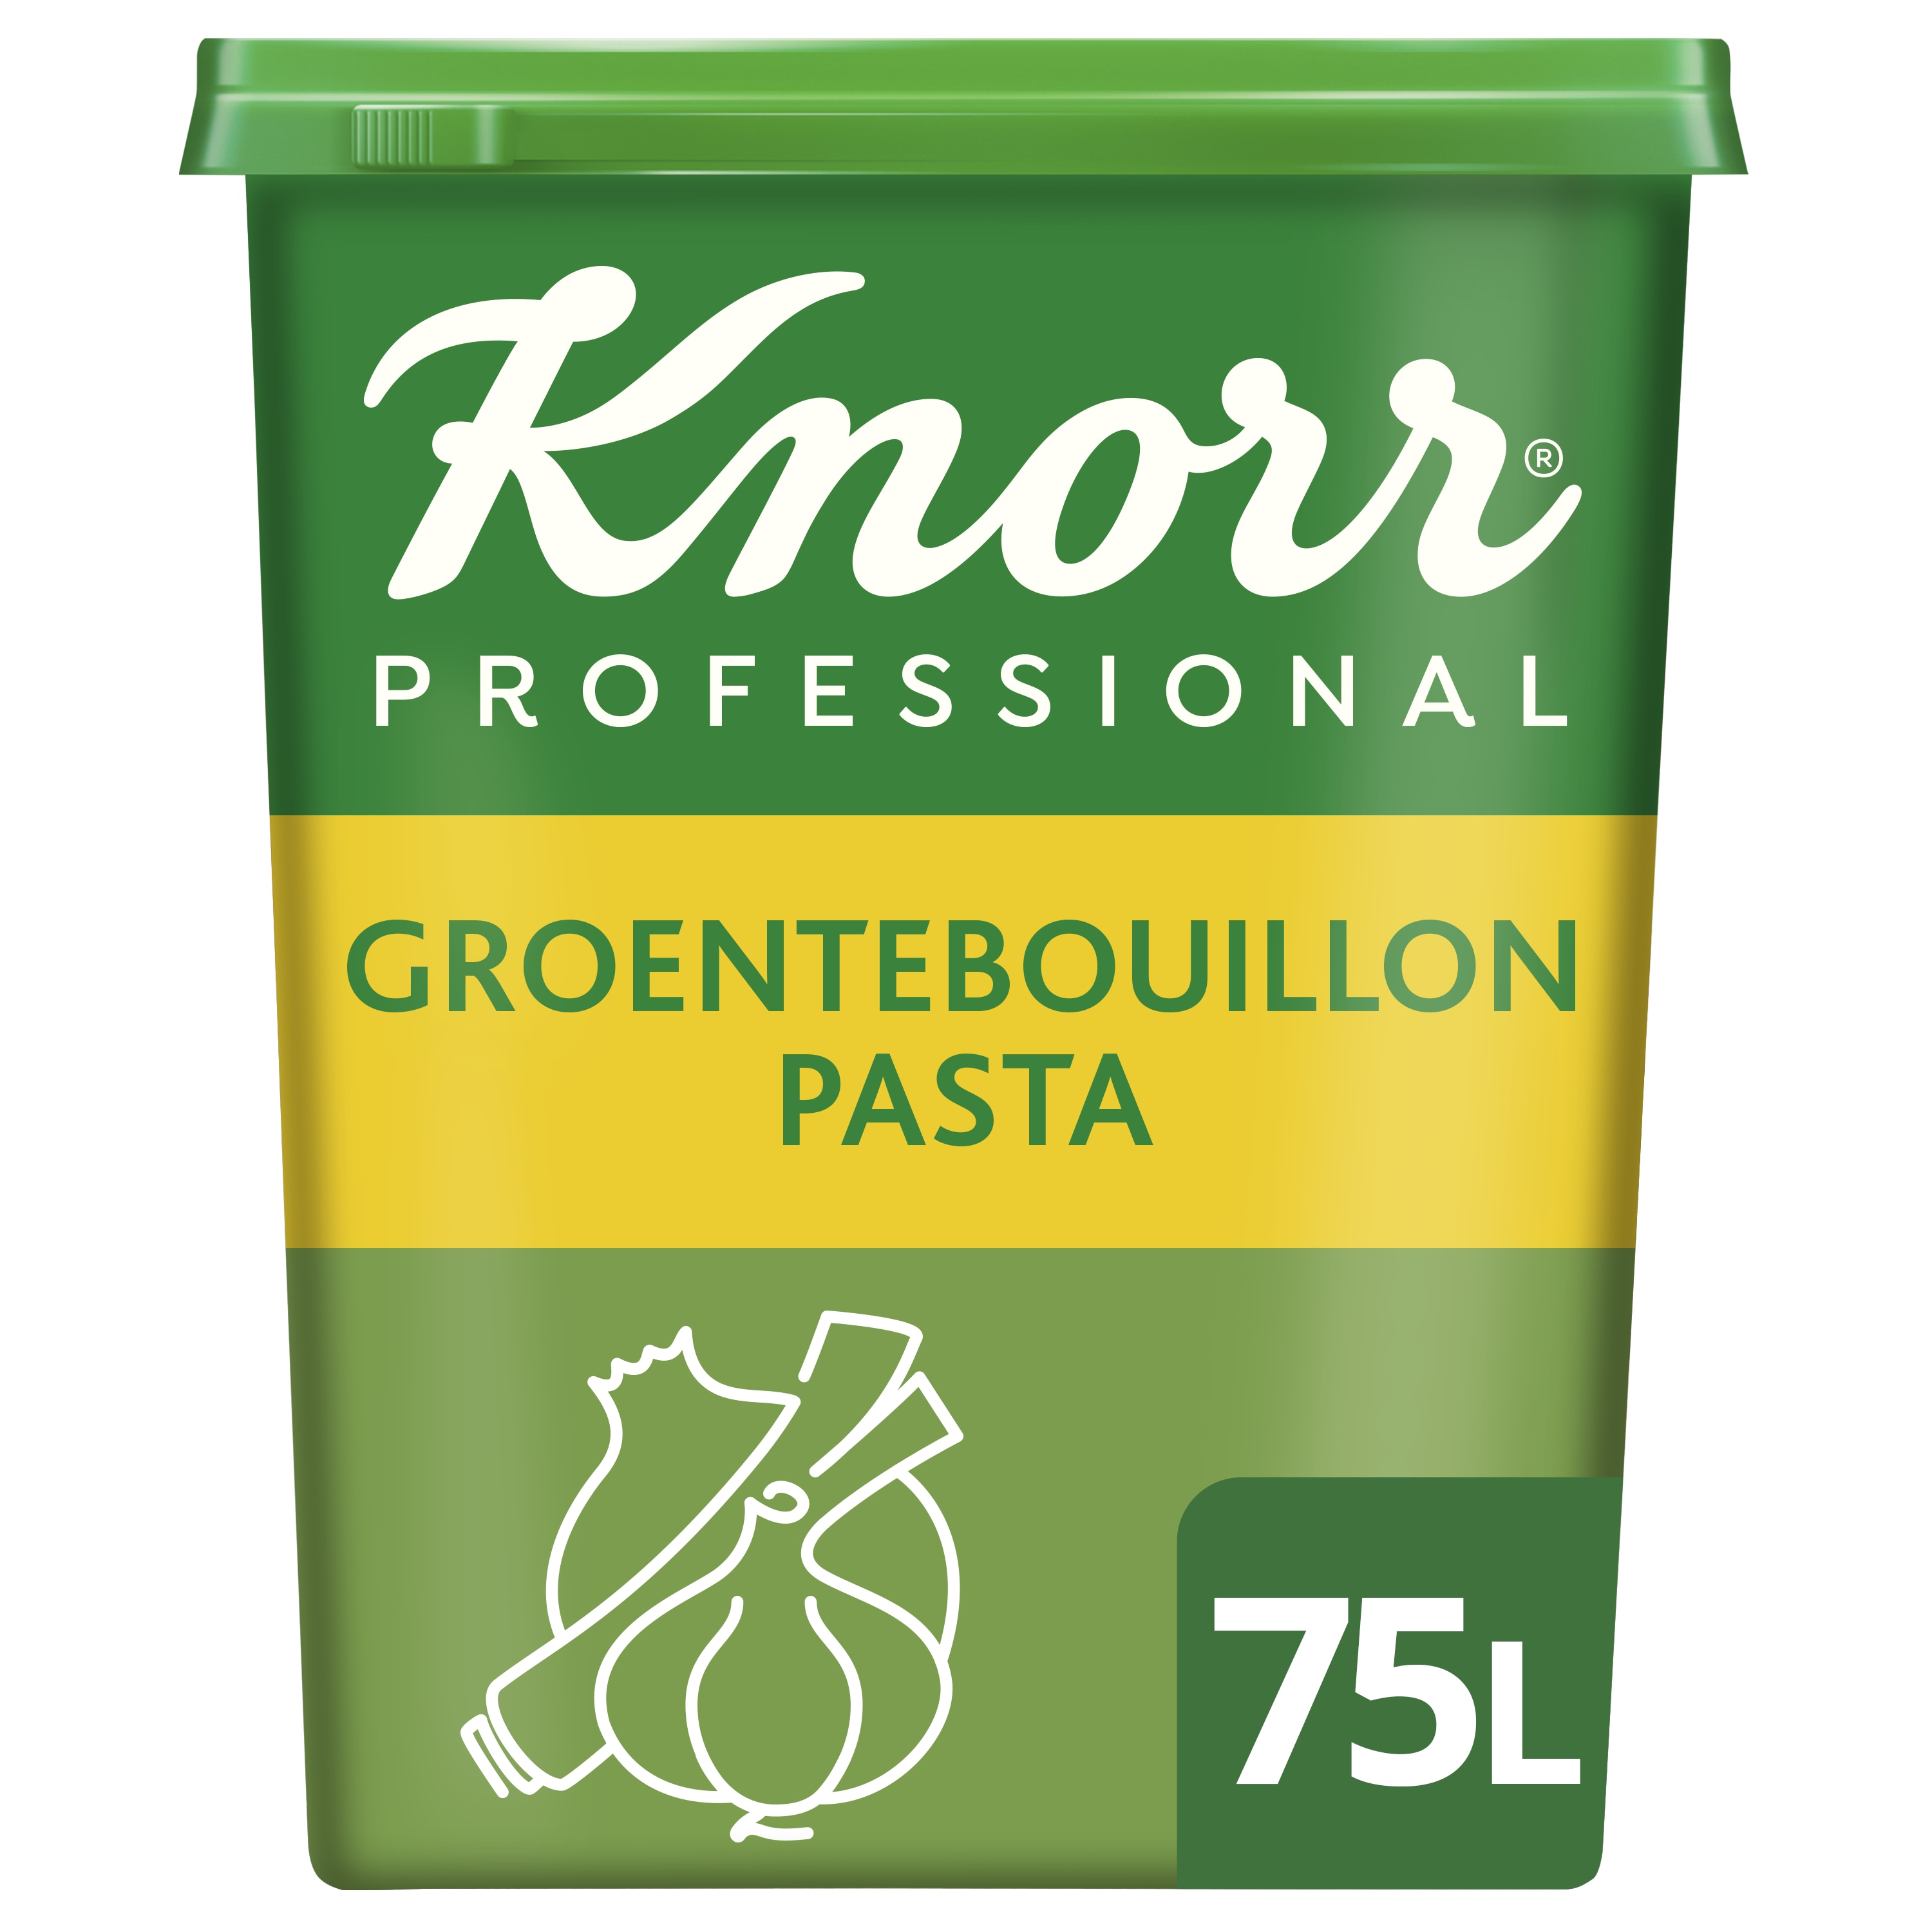 Knorr Professional Groentebouillon Pasta Opbrengst  75 - 